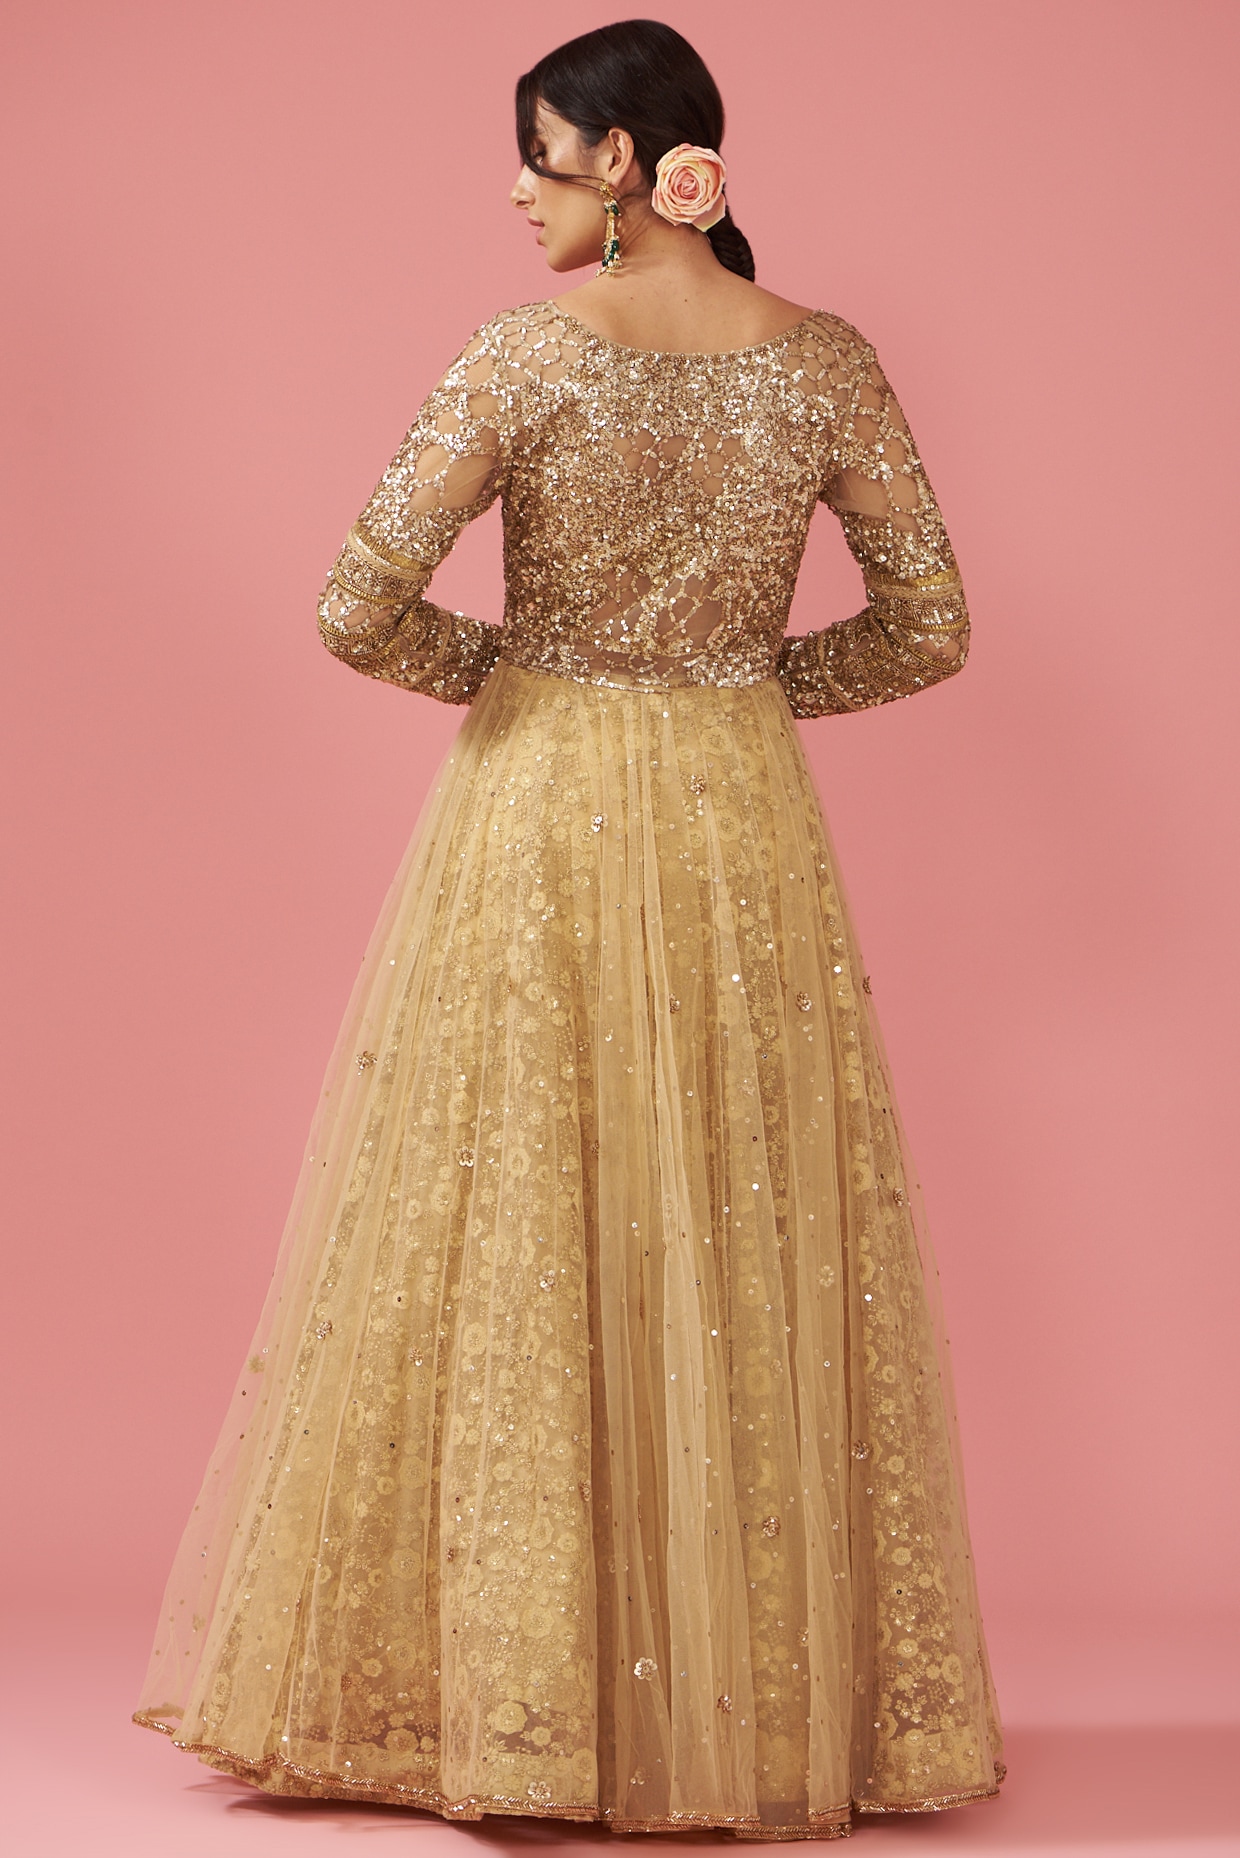 36 Fabulous Rose Gold Wedding Color Ideas You'll Fall In Love With -  Elegantweddinginvites.com Blog | Gold wedding dress, Bridal gowns, Wedding  dresses unique